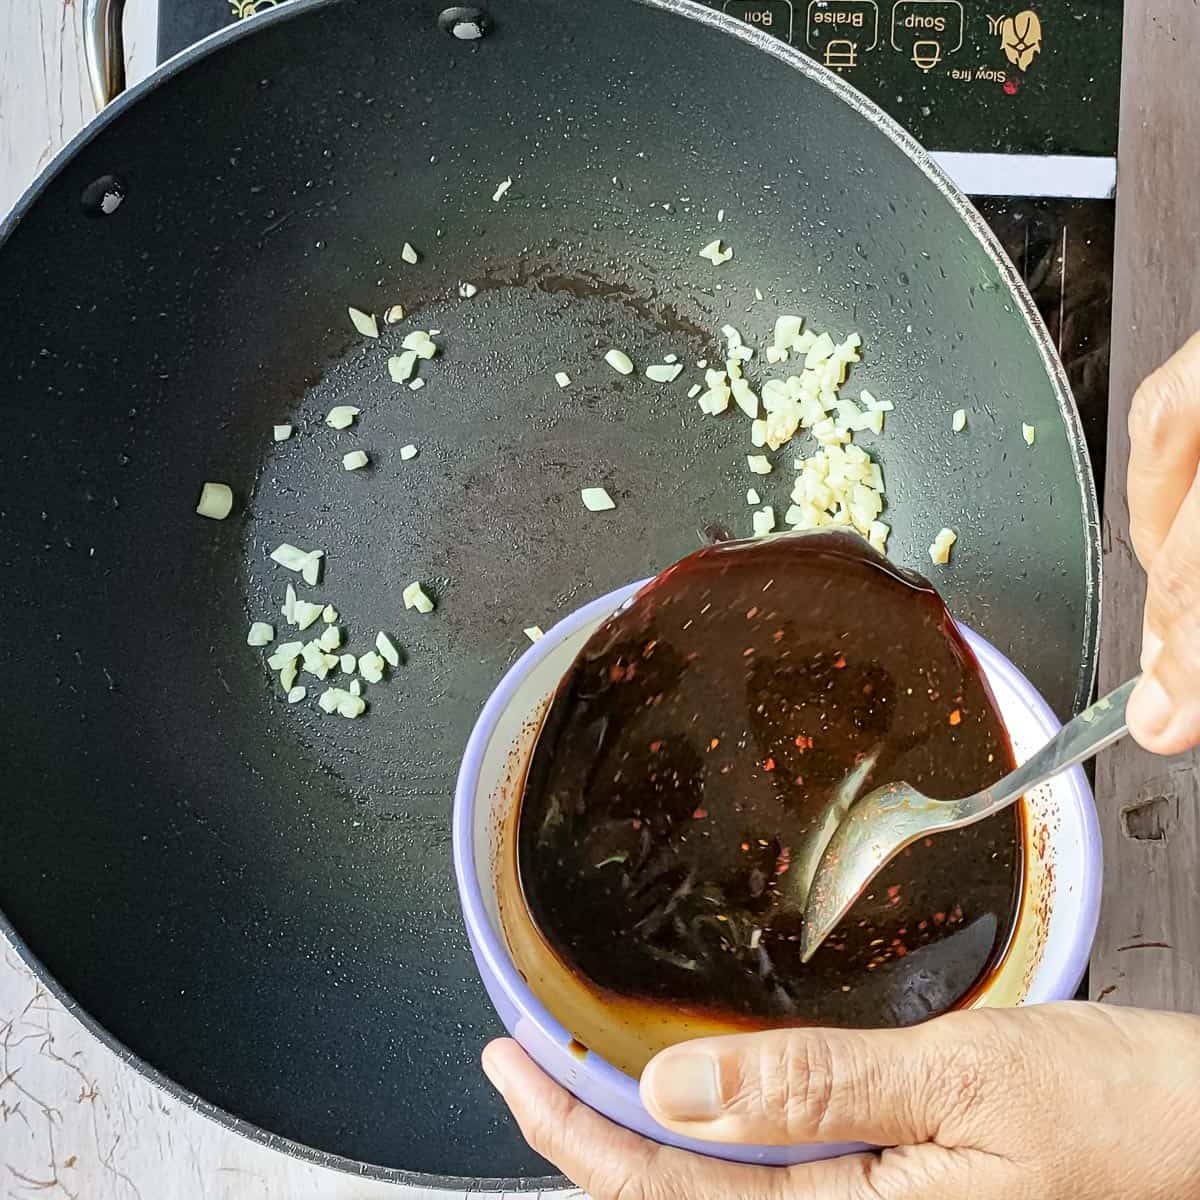 honey garlic sauce being added to stir-fried garlic.